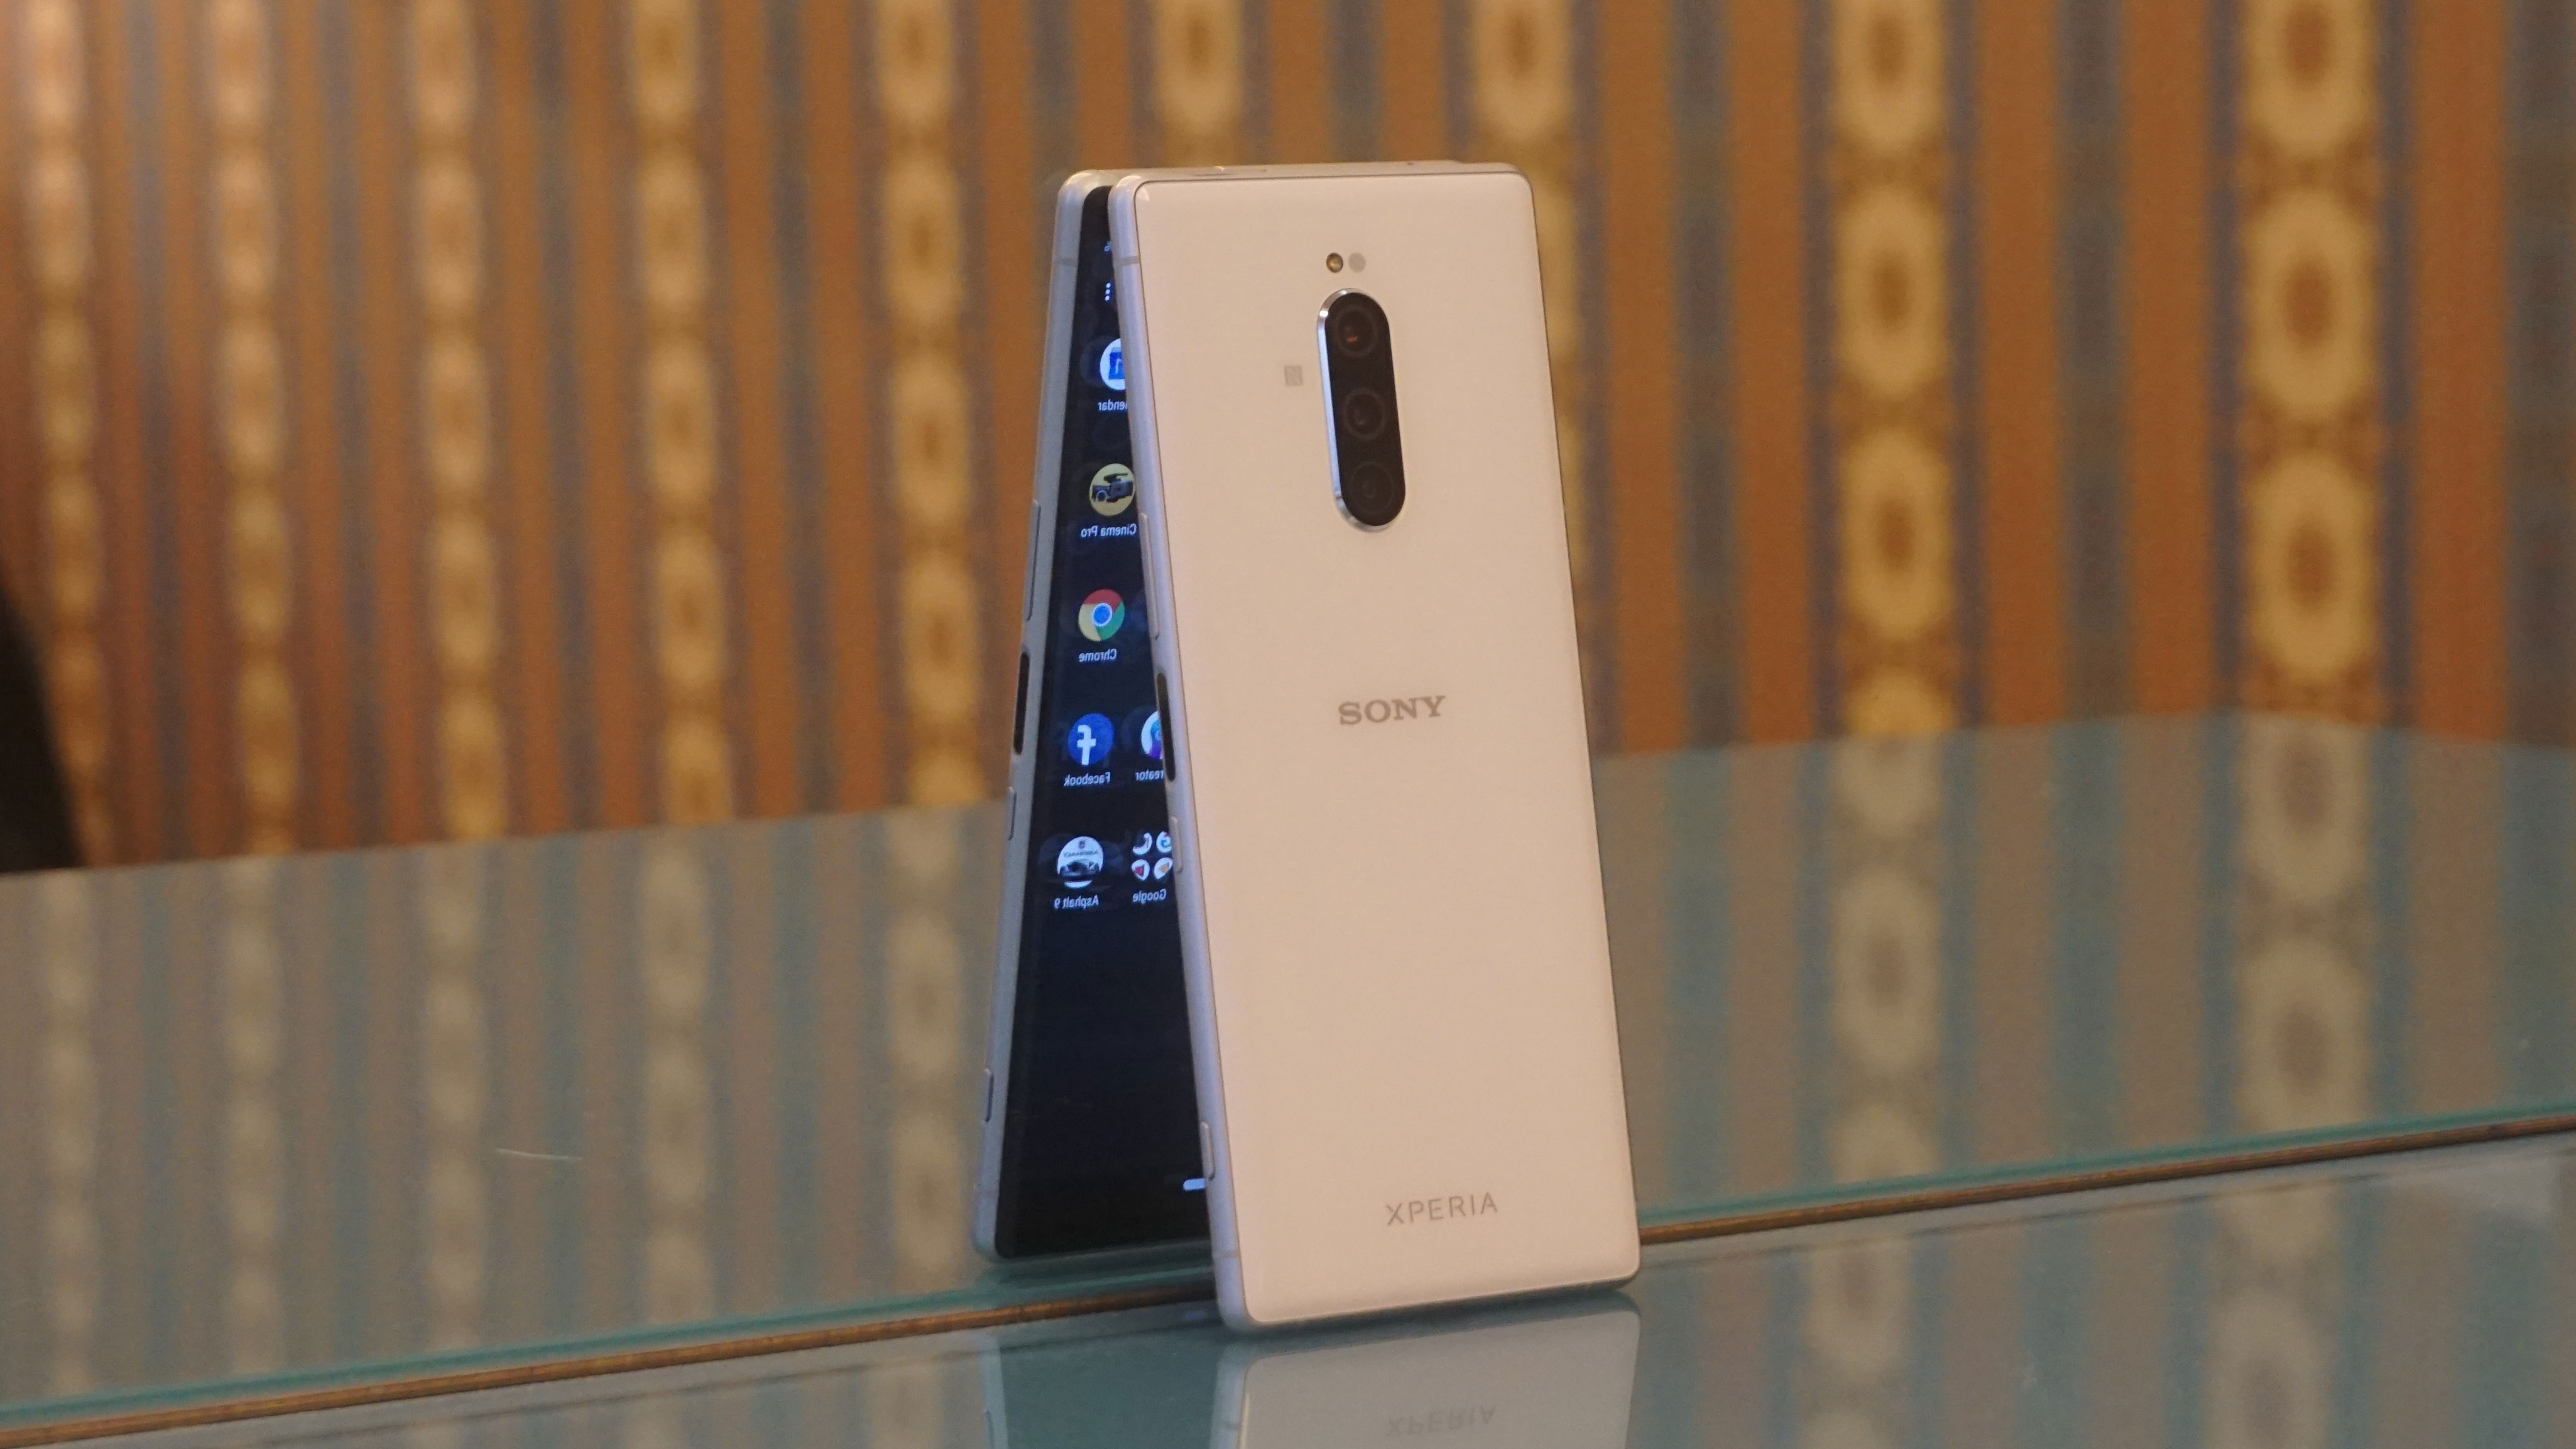 Sony S Android 10 Upgrade List Seemingly Lacks Some Key Phones